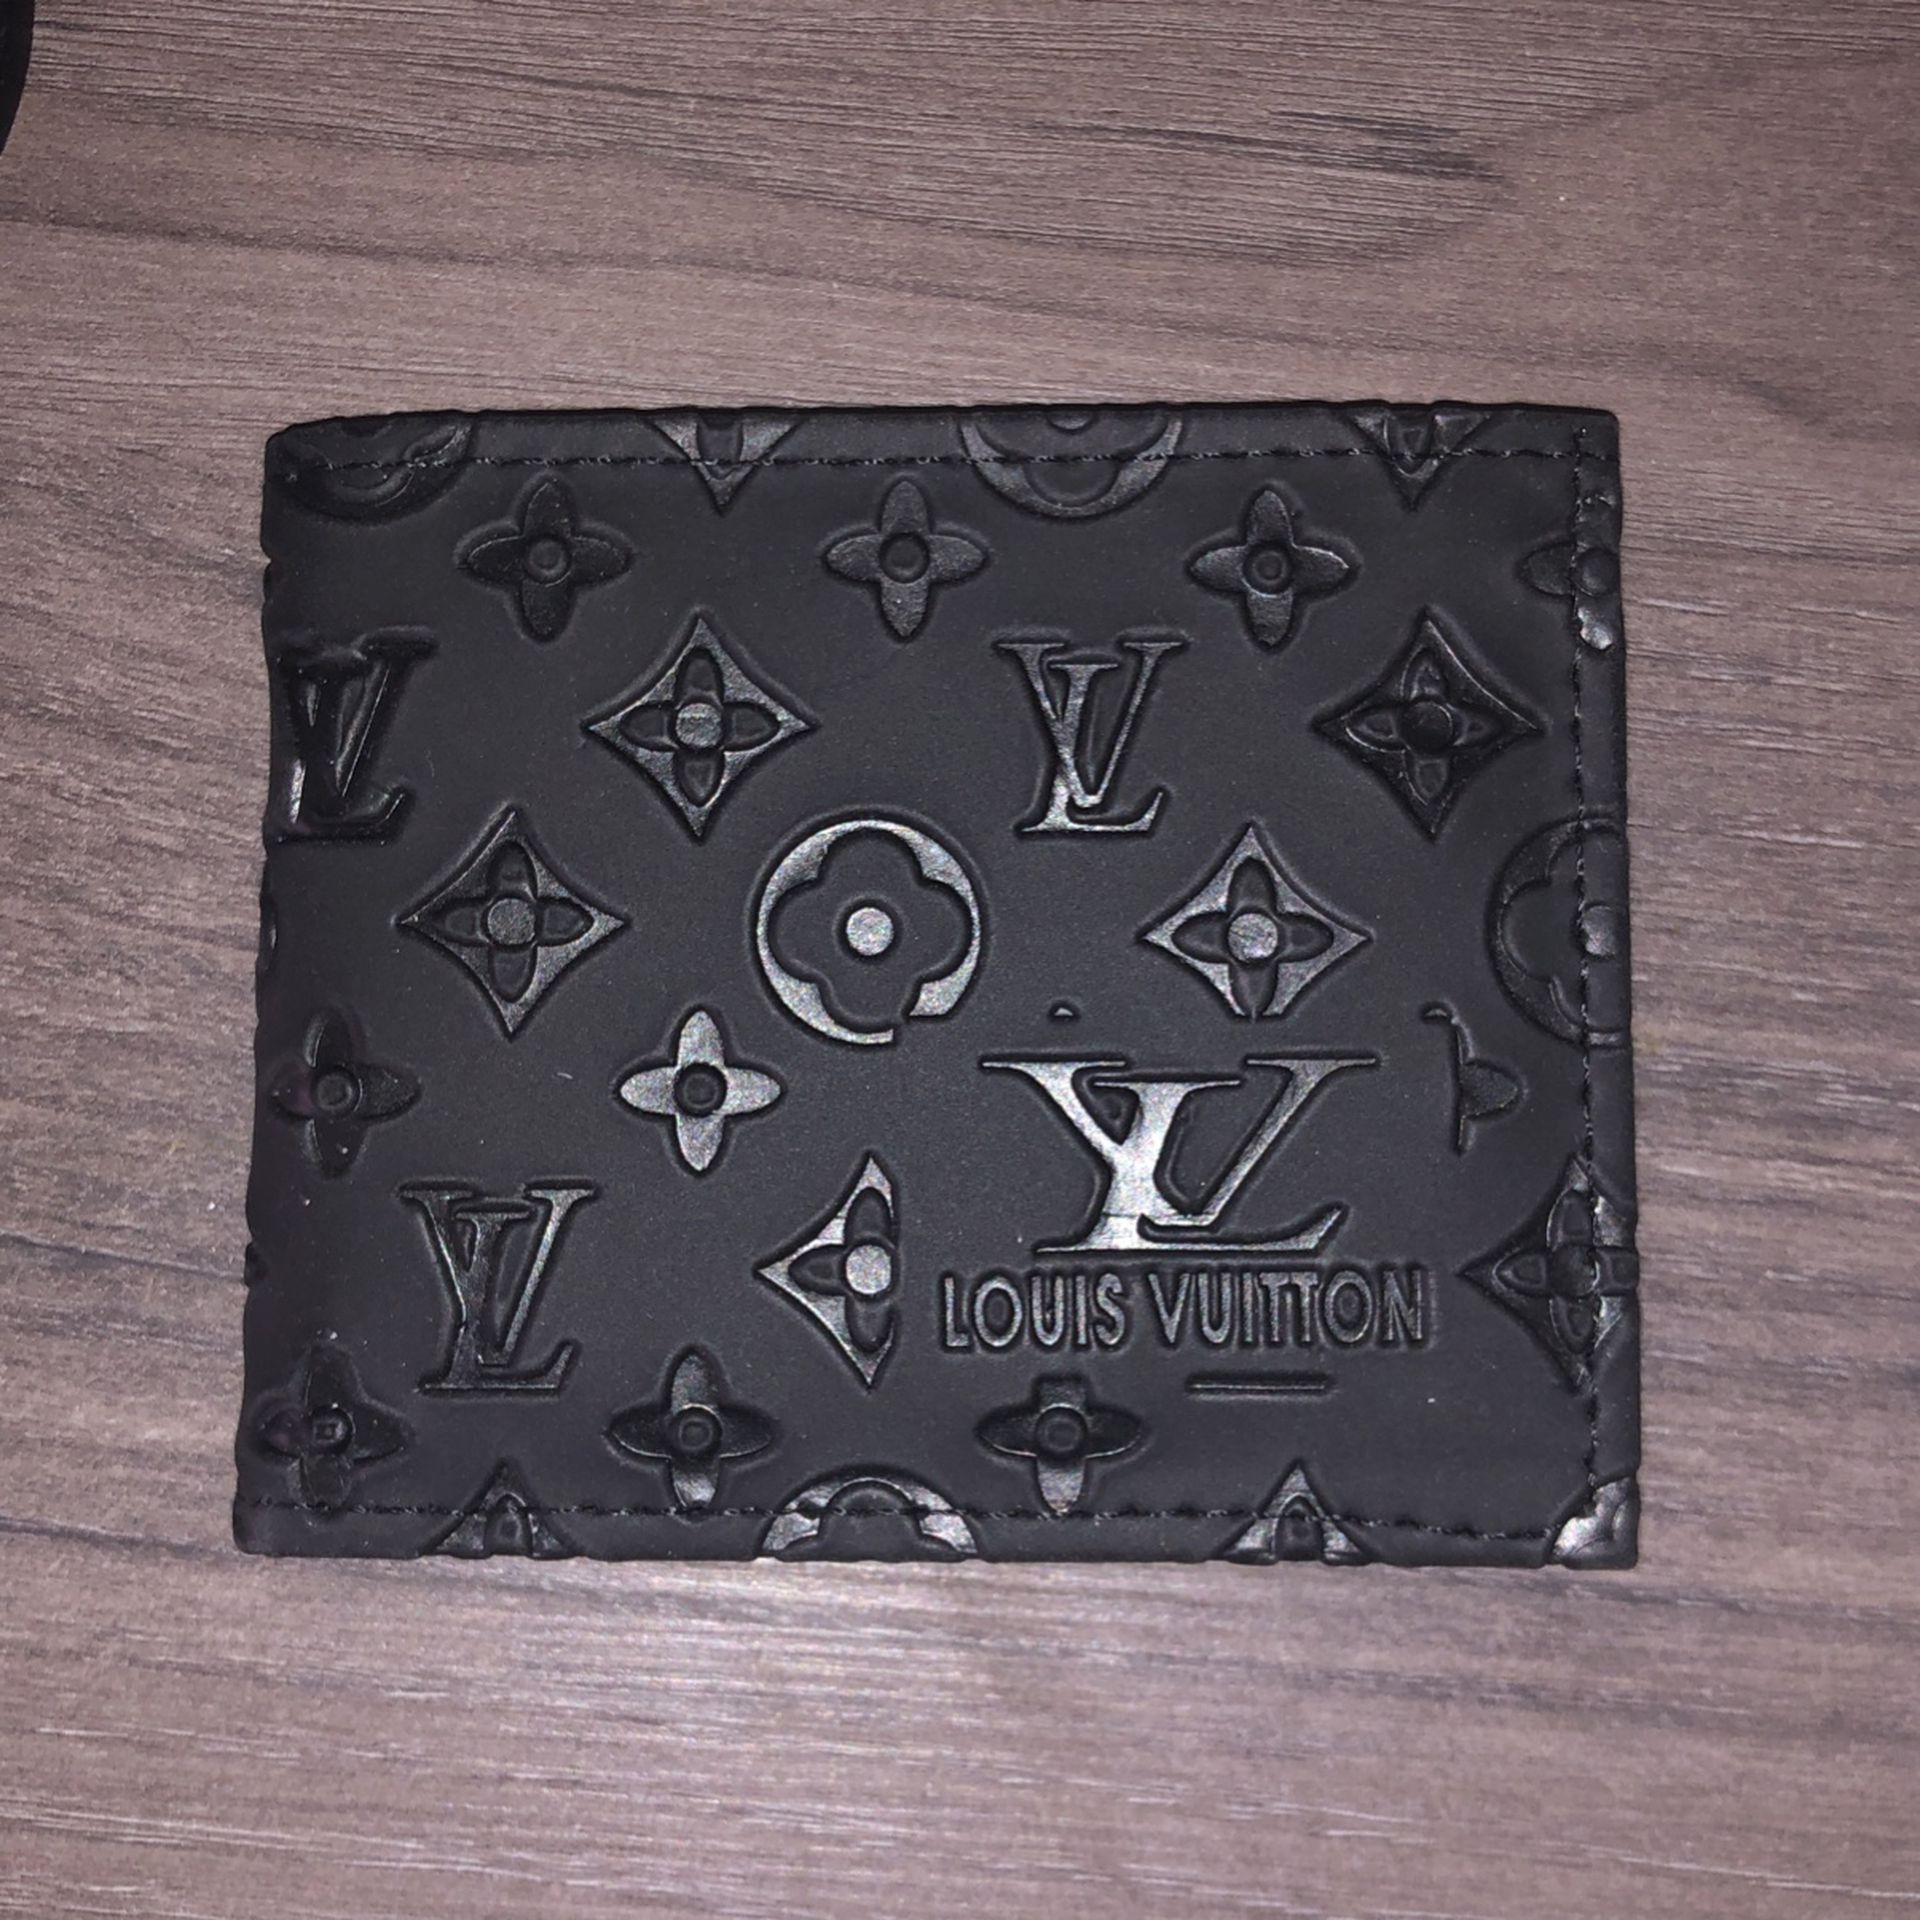 NIB Louis Vuitton sac plat XS for Sale in Irvine, CA - OfferUp